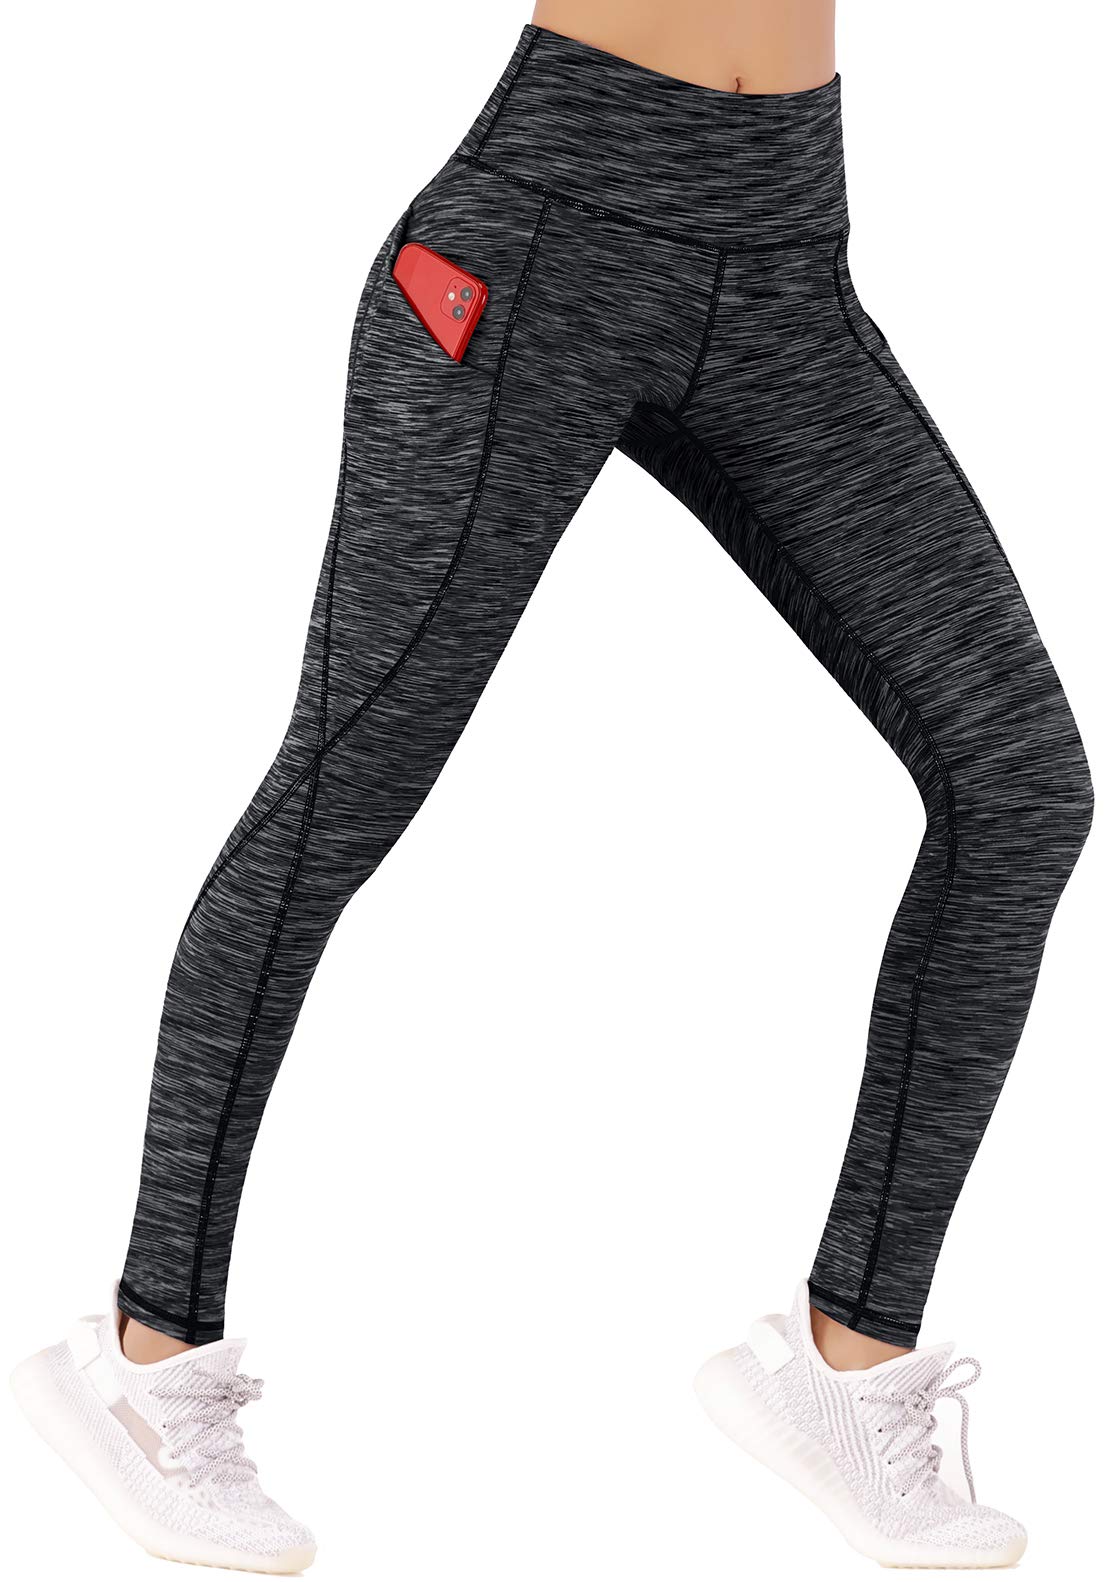 Ewedoos Fleece Lined Leggings with Pockets for Women - Thermal Warm Workout  Winter Leggings for Women Yoga Pants for Women Medium New Charcoal